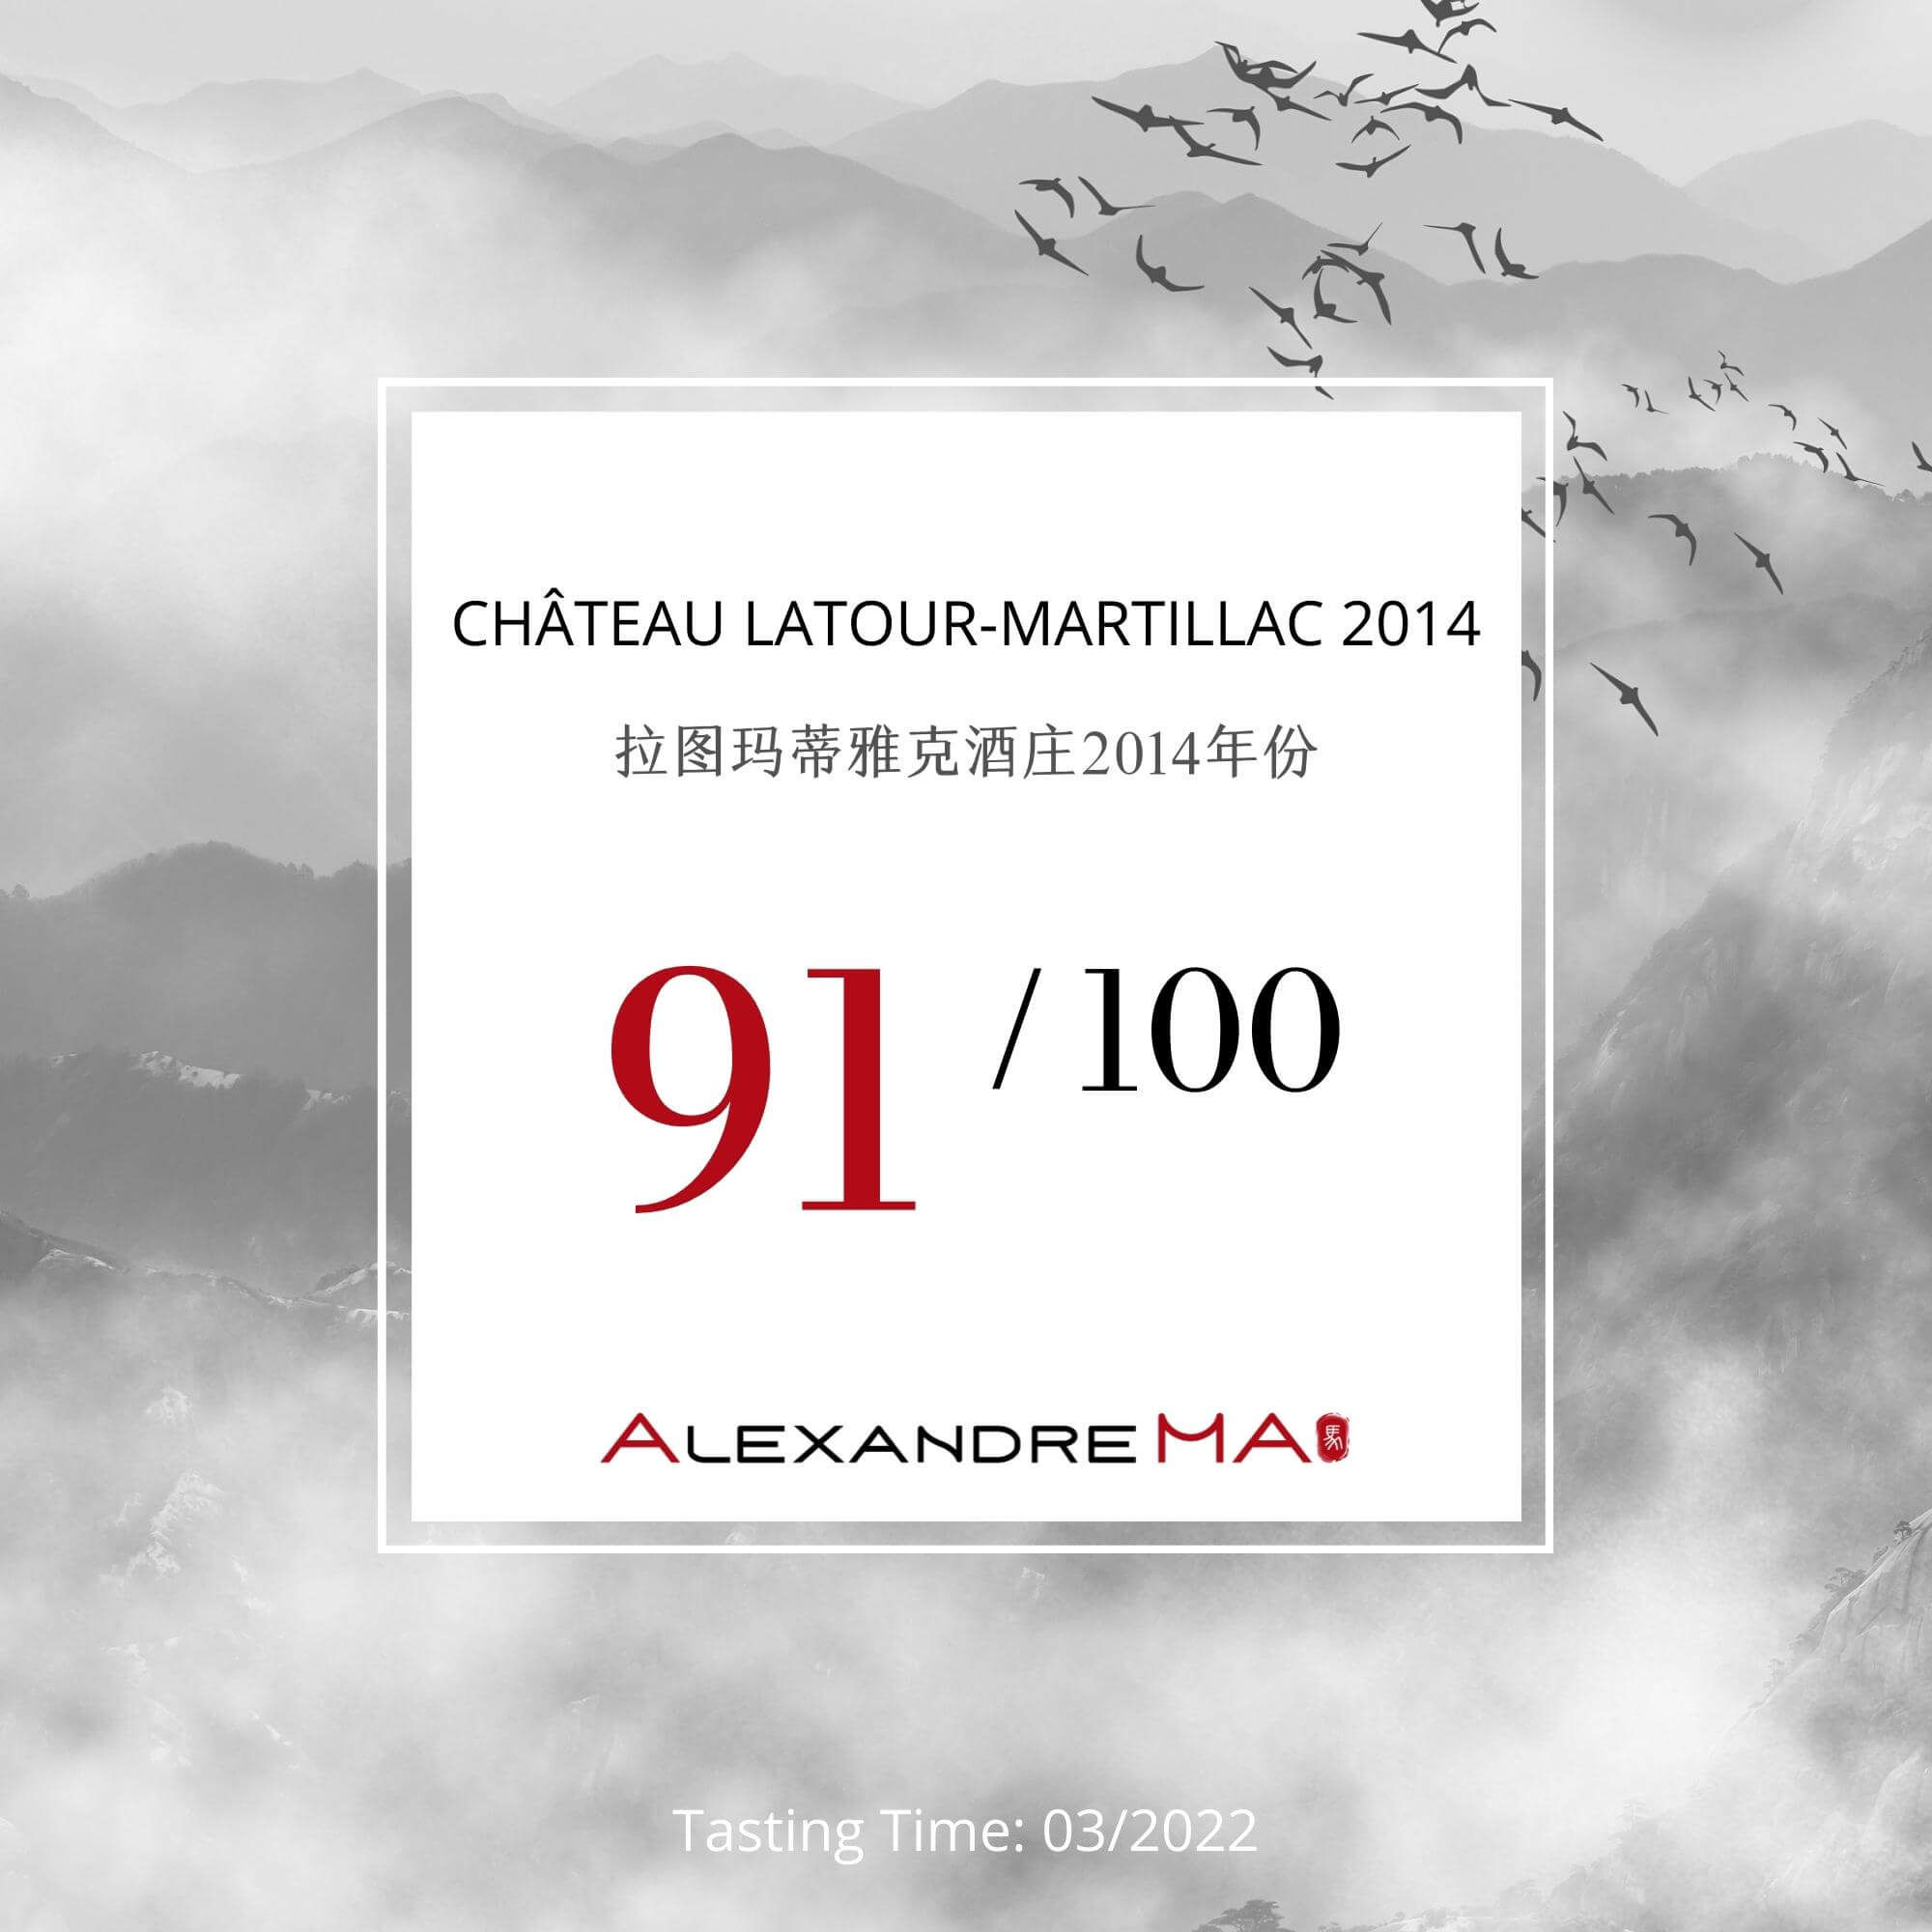 Château Latour-Martillac 2014 - Alexandre MA